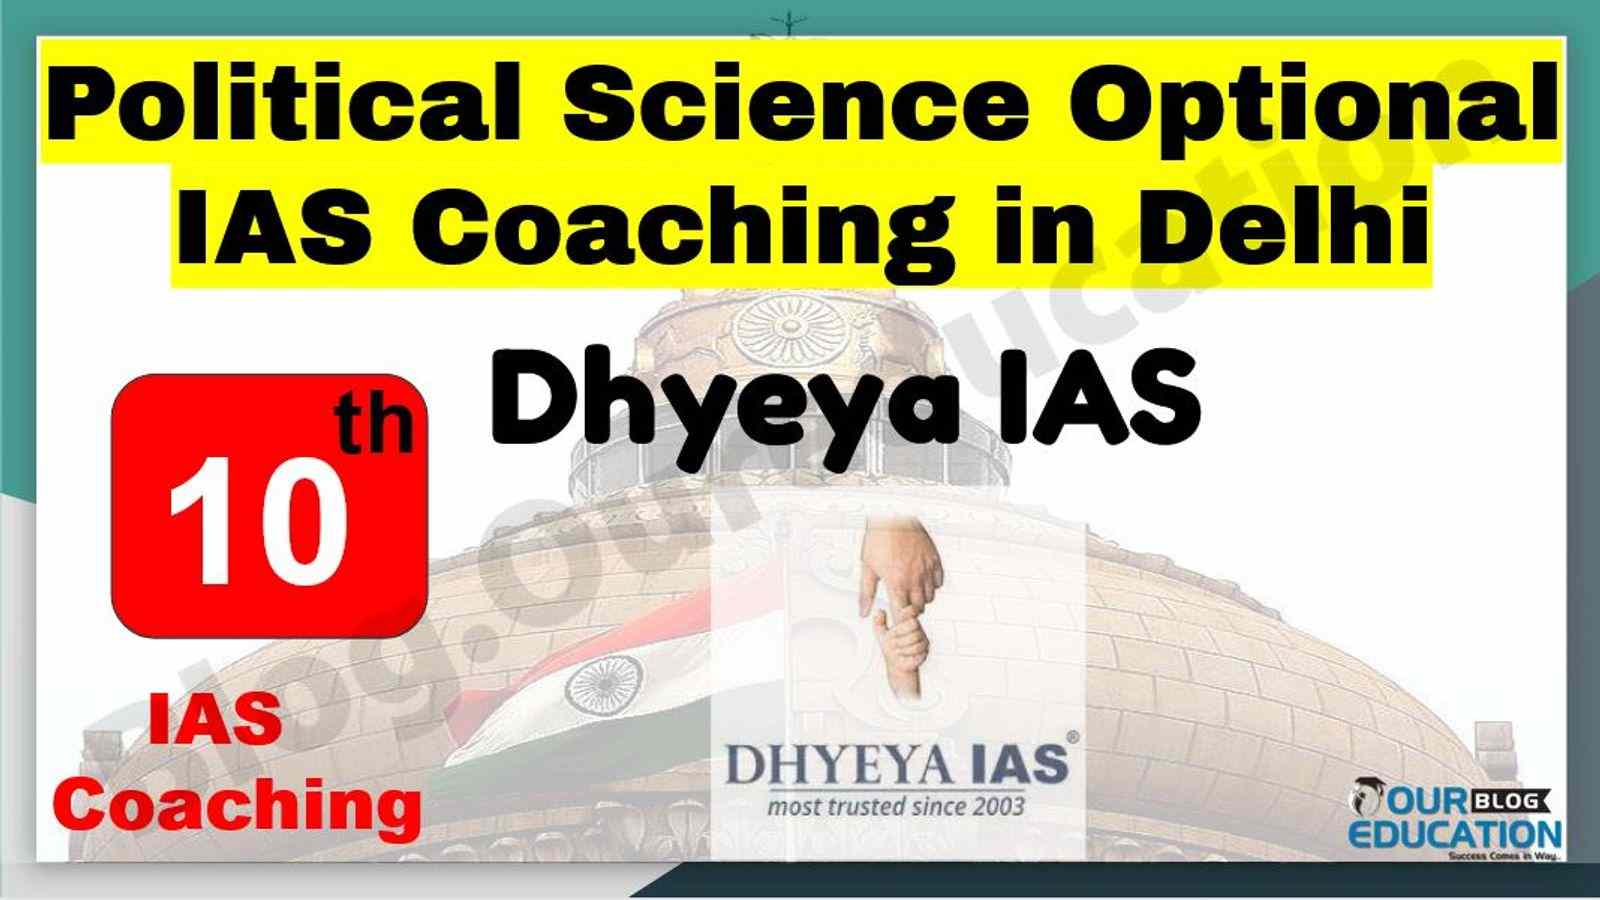 Political Science Optional IAS coaching in Delhi